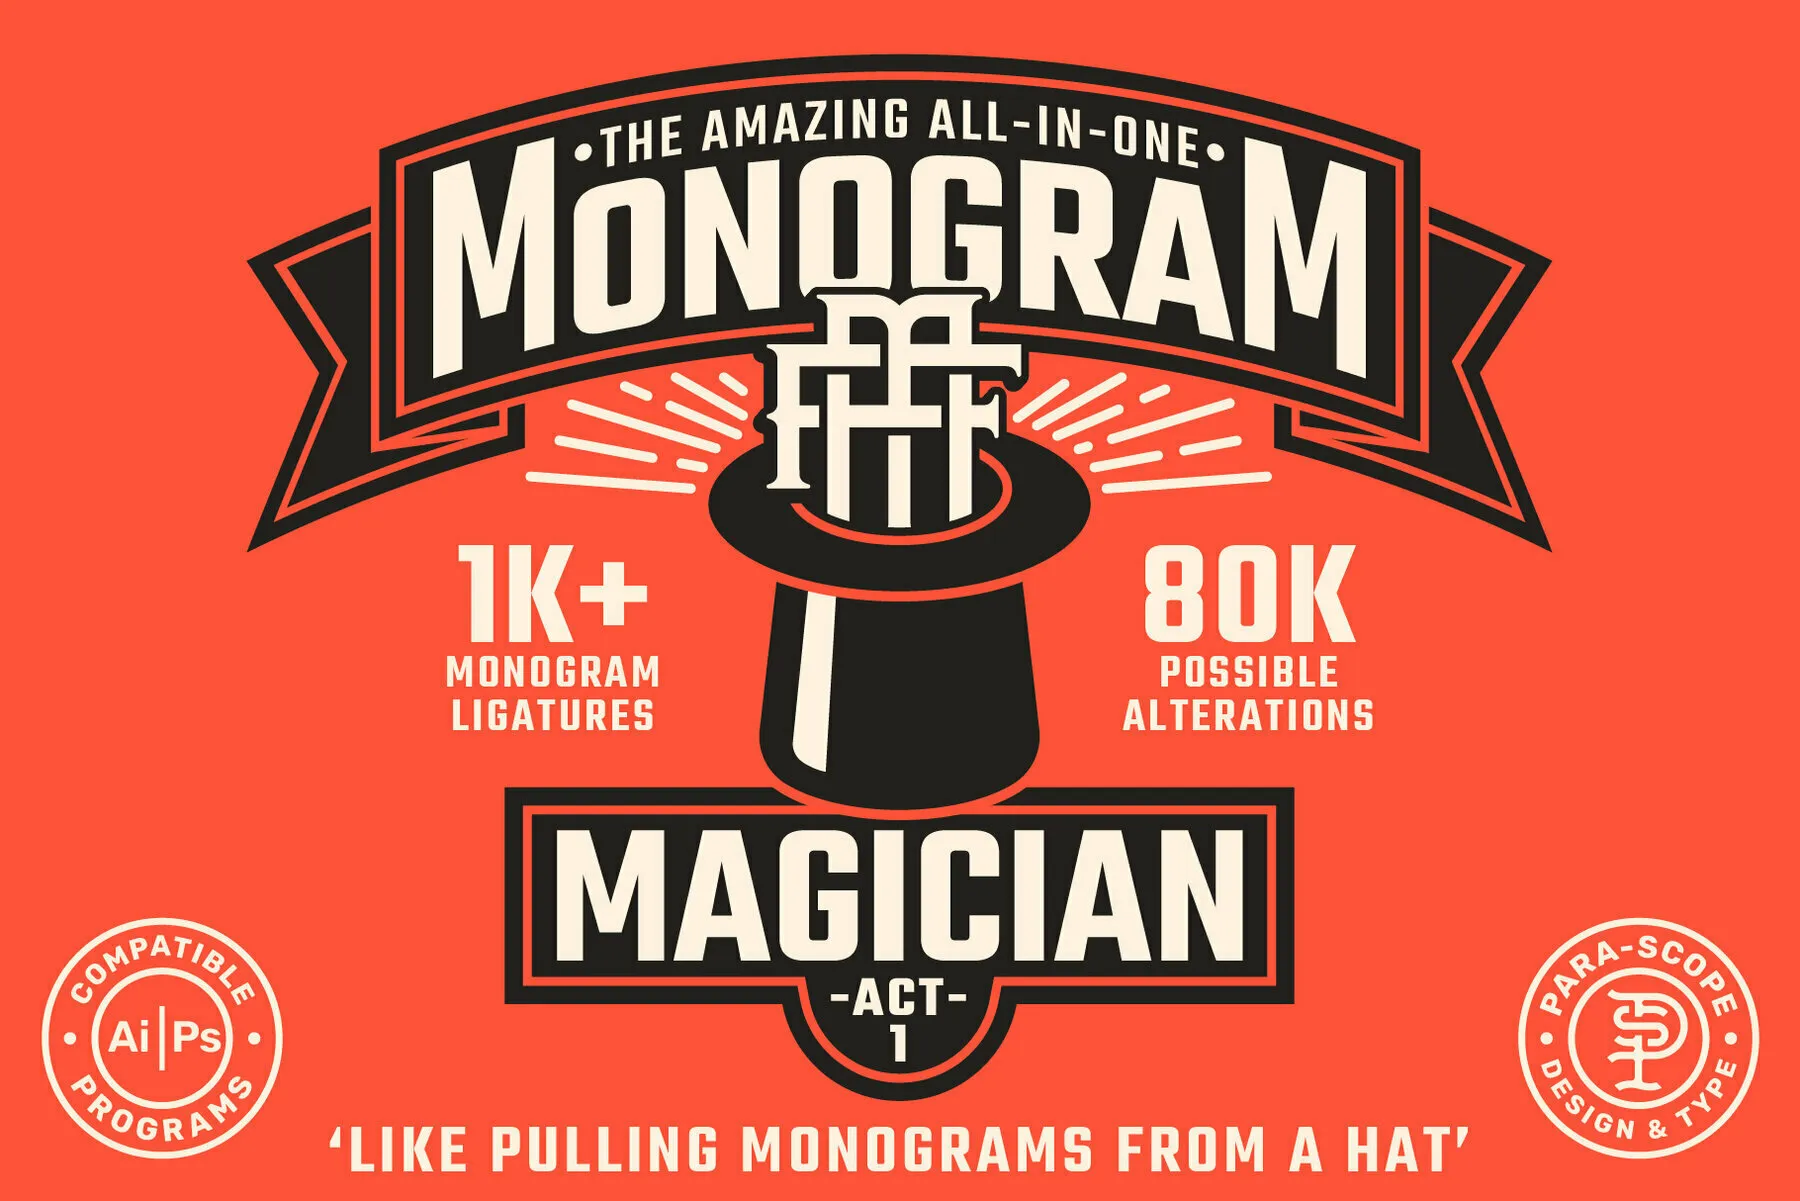 MONOGRAM MAGICIAN - ACT 1